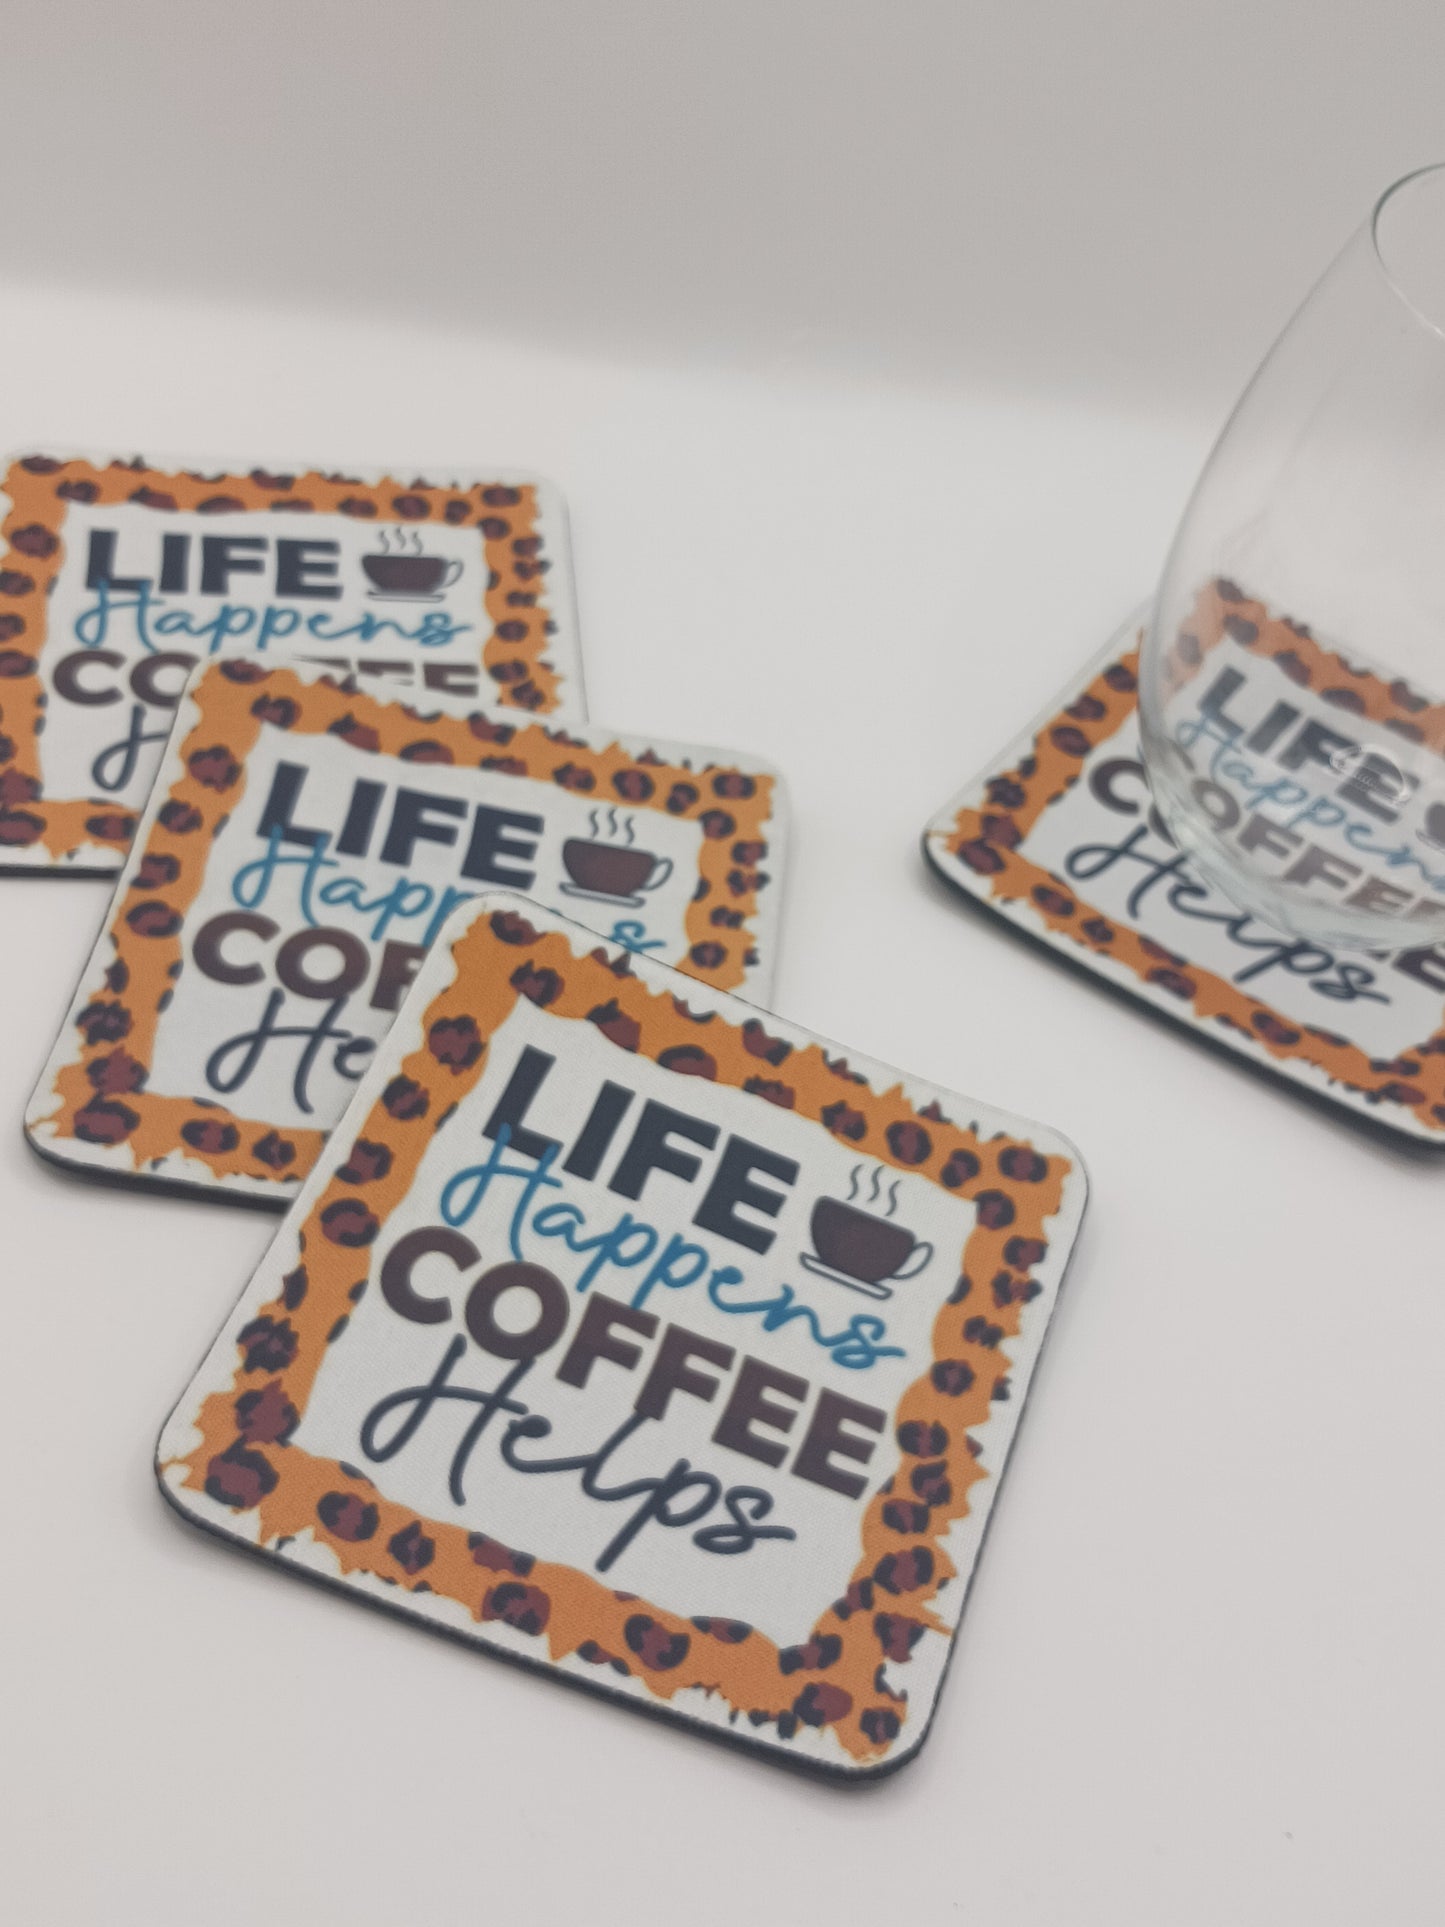 Life happens coffee helps tabletop coasters